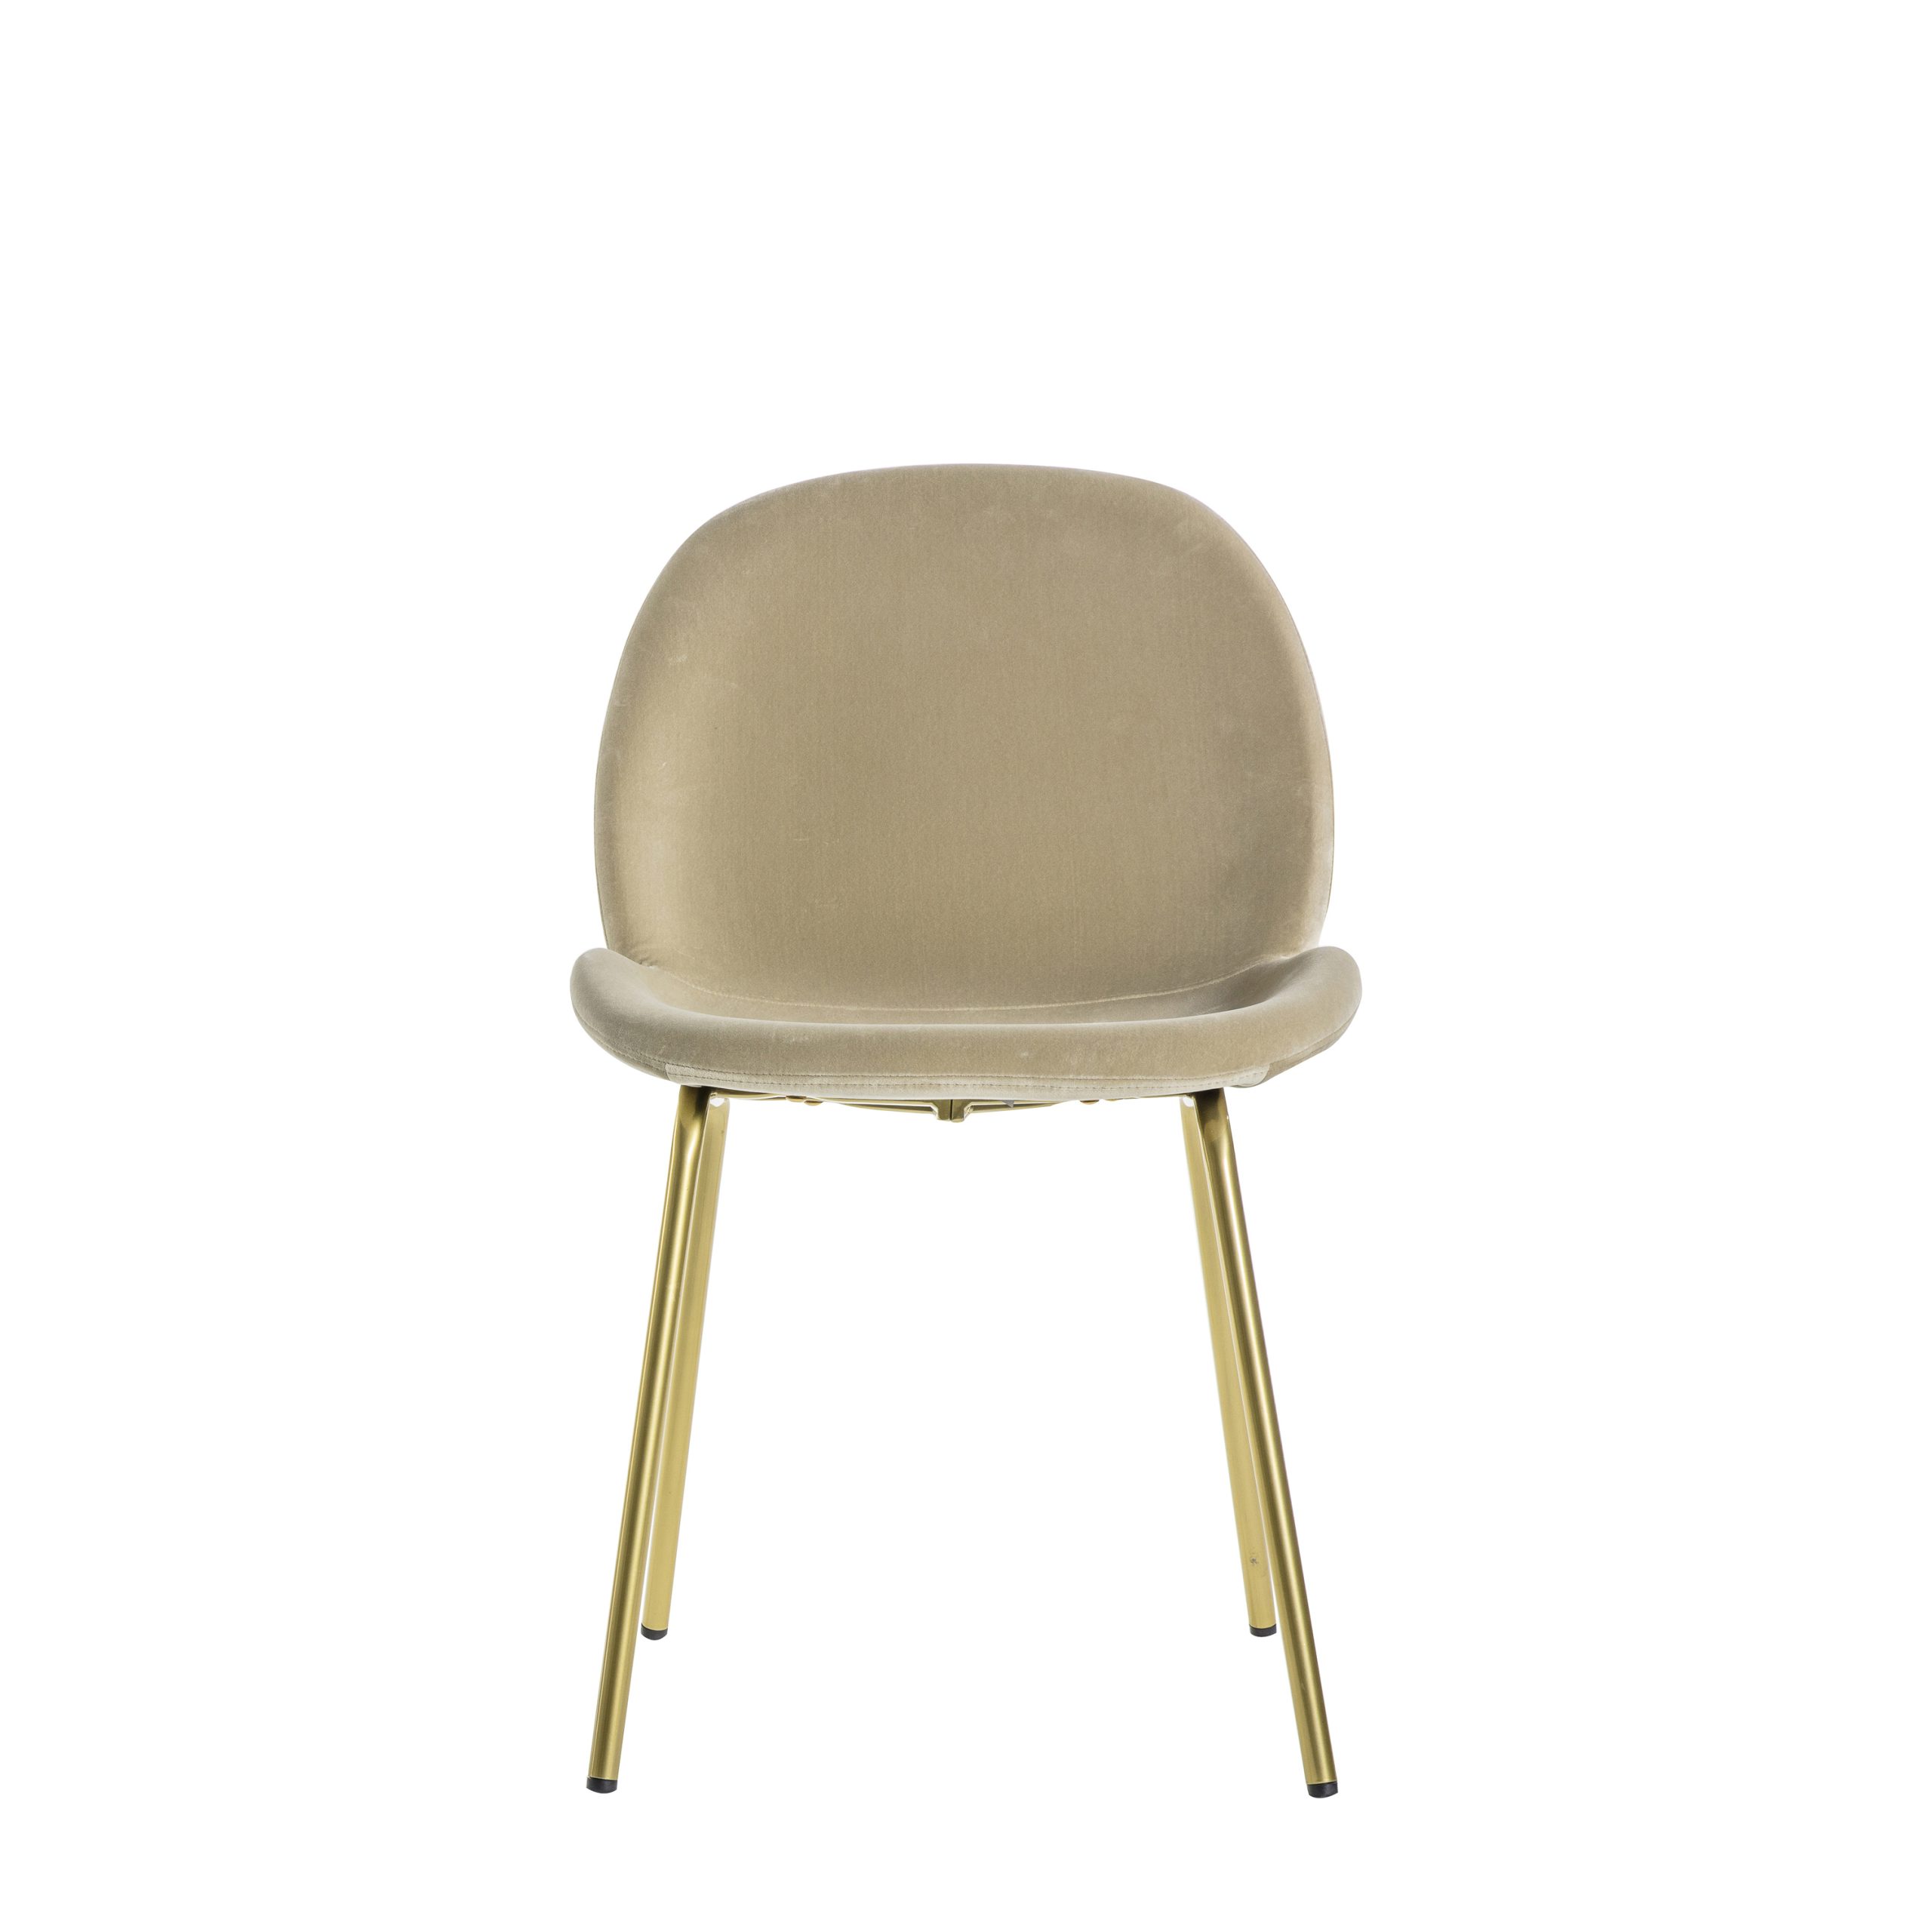 Gallery Direct Flanagan Chair Oatmeal Velvet (Set of 2)